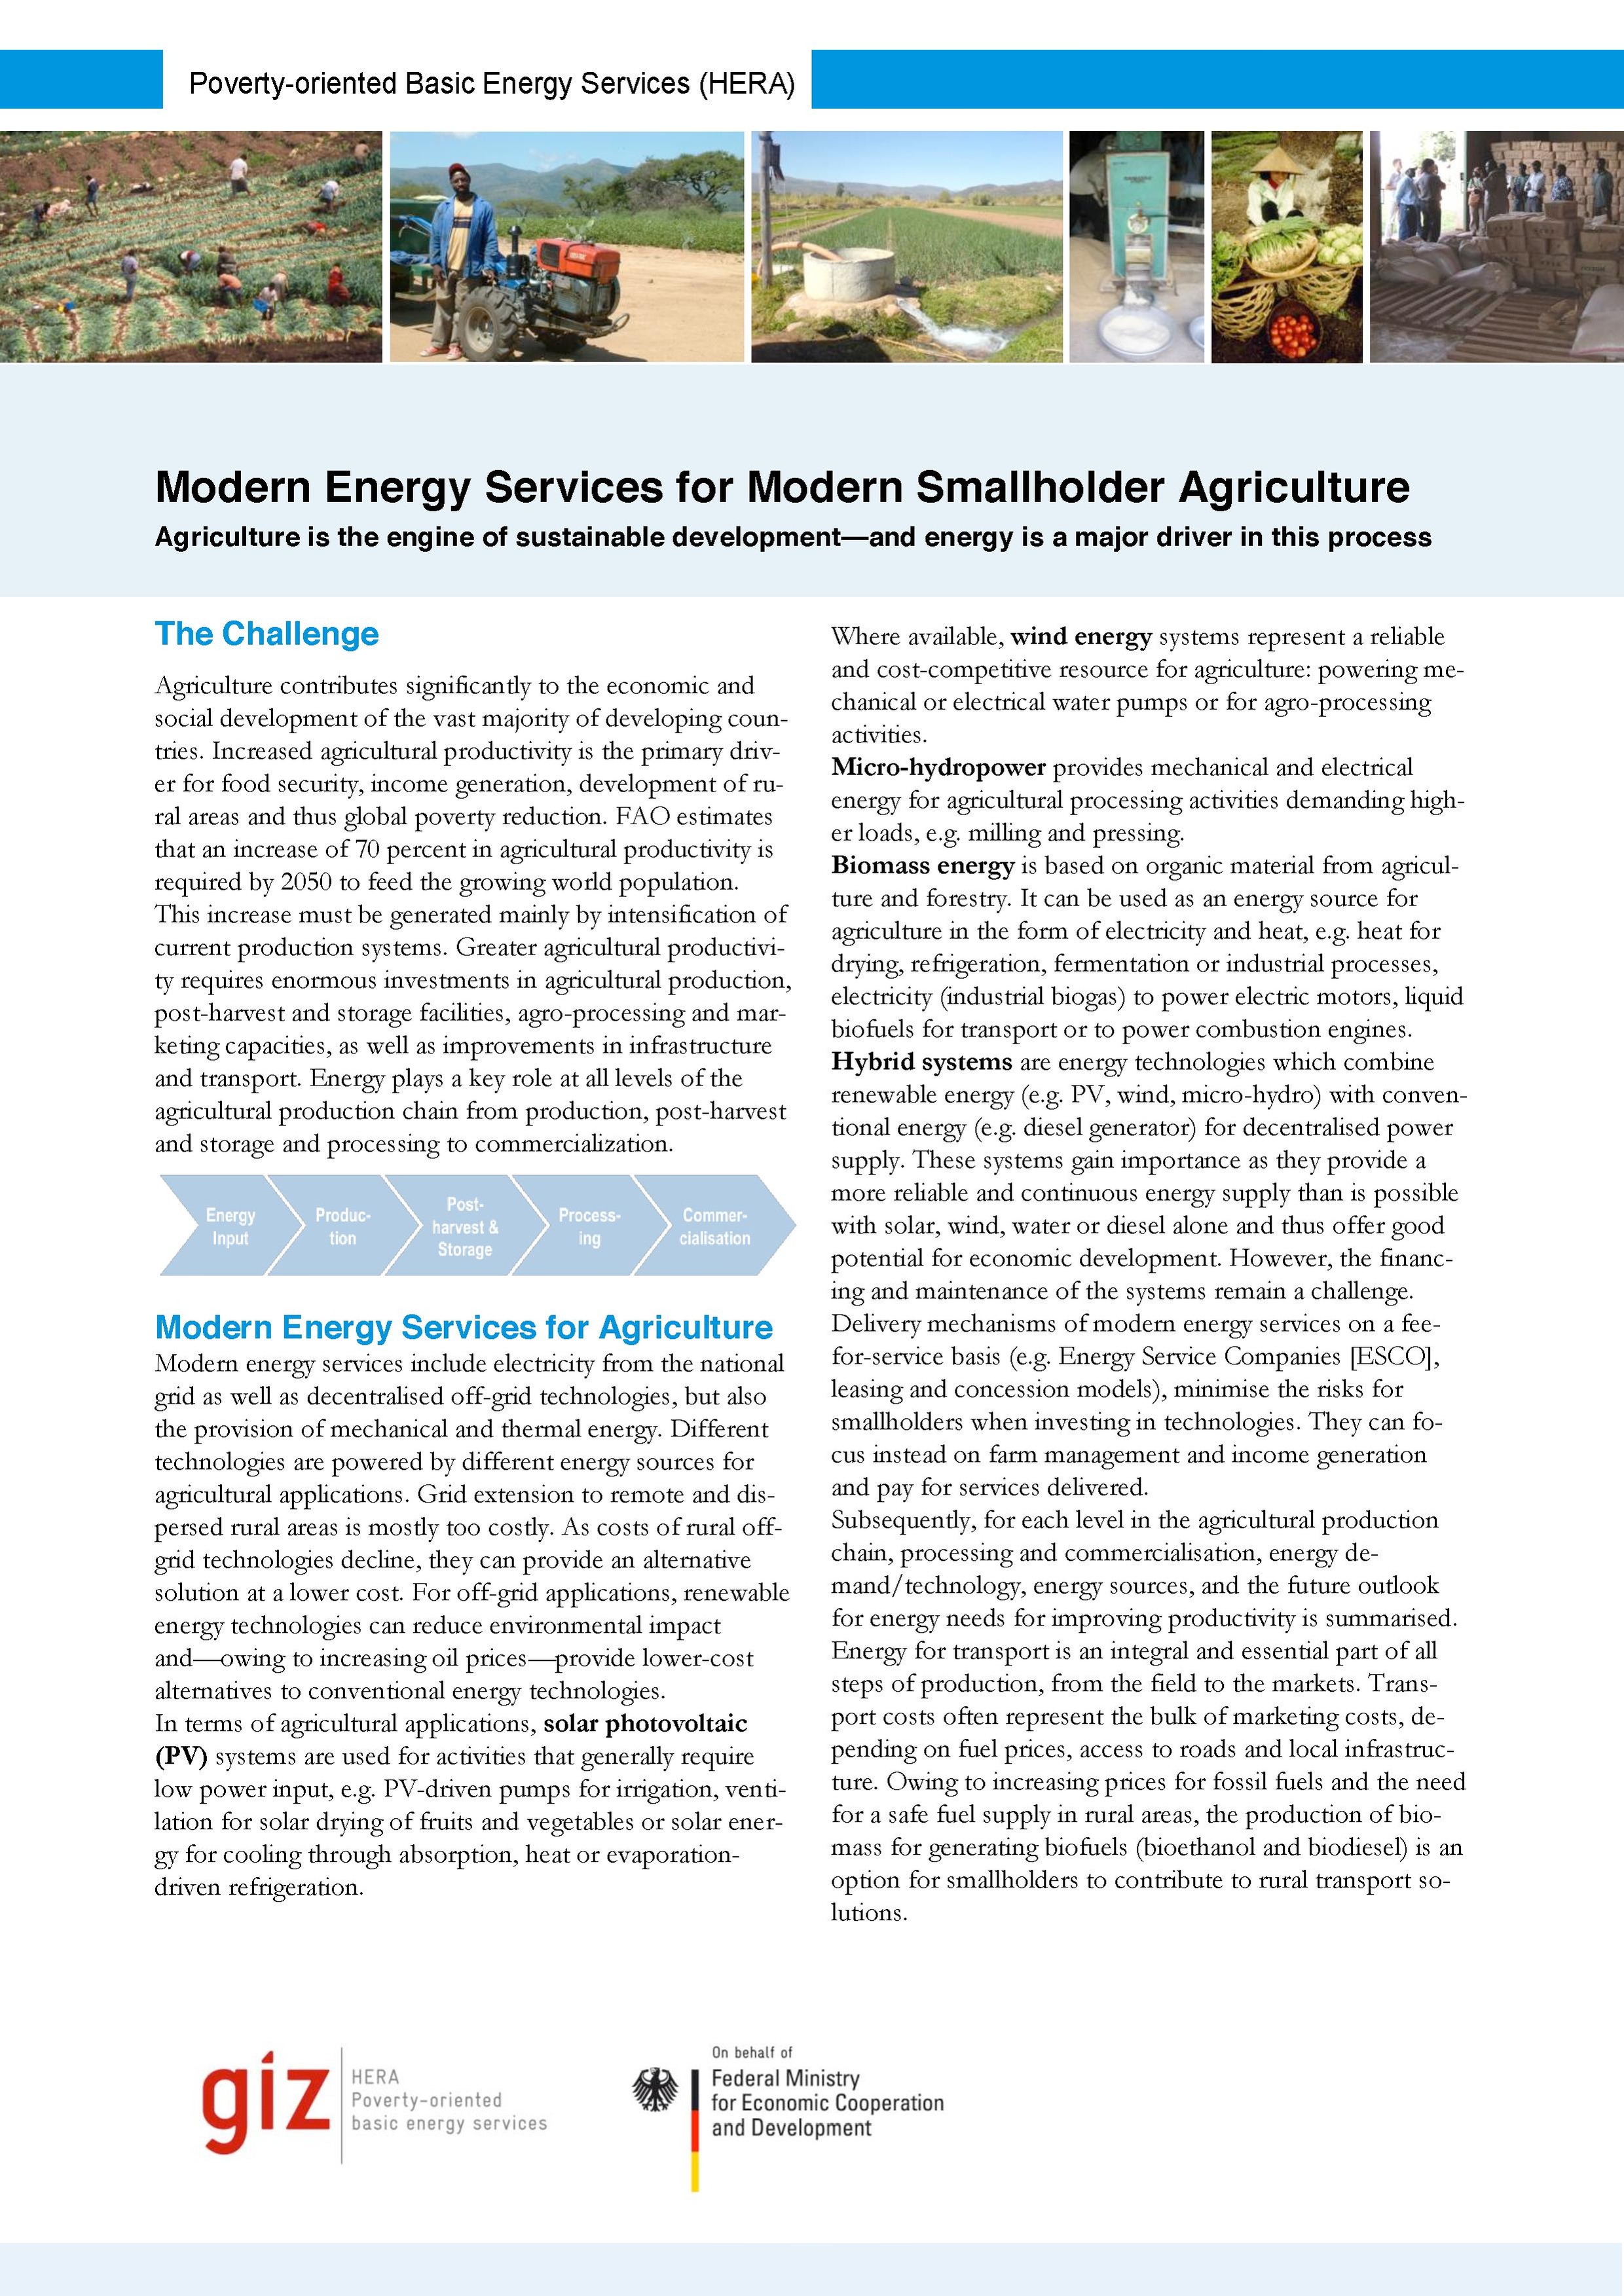 GIZ HERA Modern Energy for Modern Agriculture